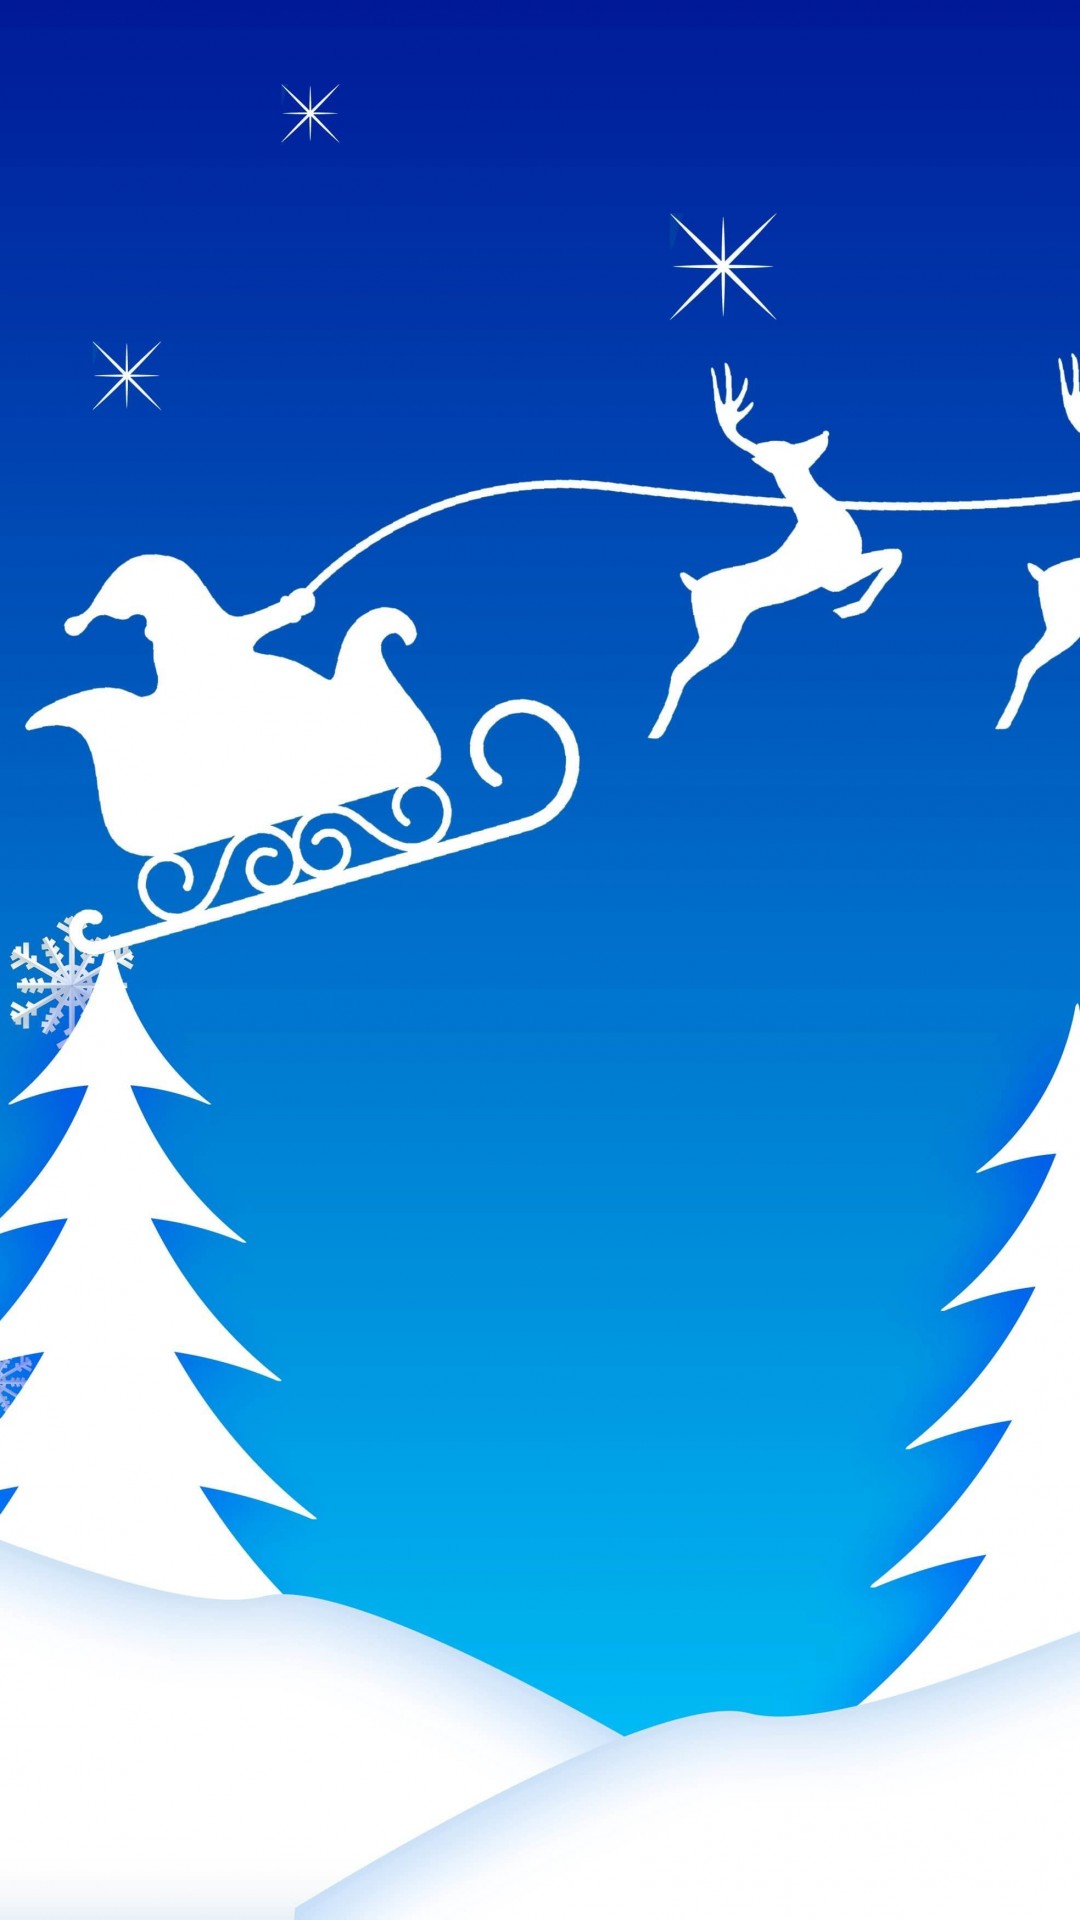 Santa’s Sleigh Illustration Wallpaper for SONY Xperia Z3